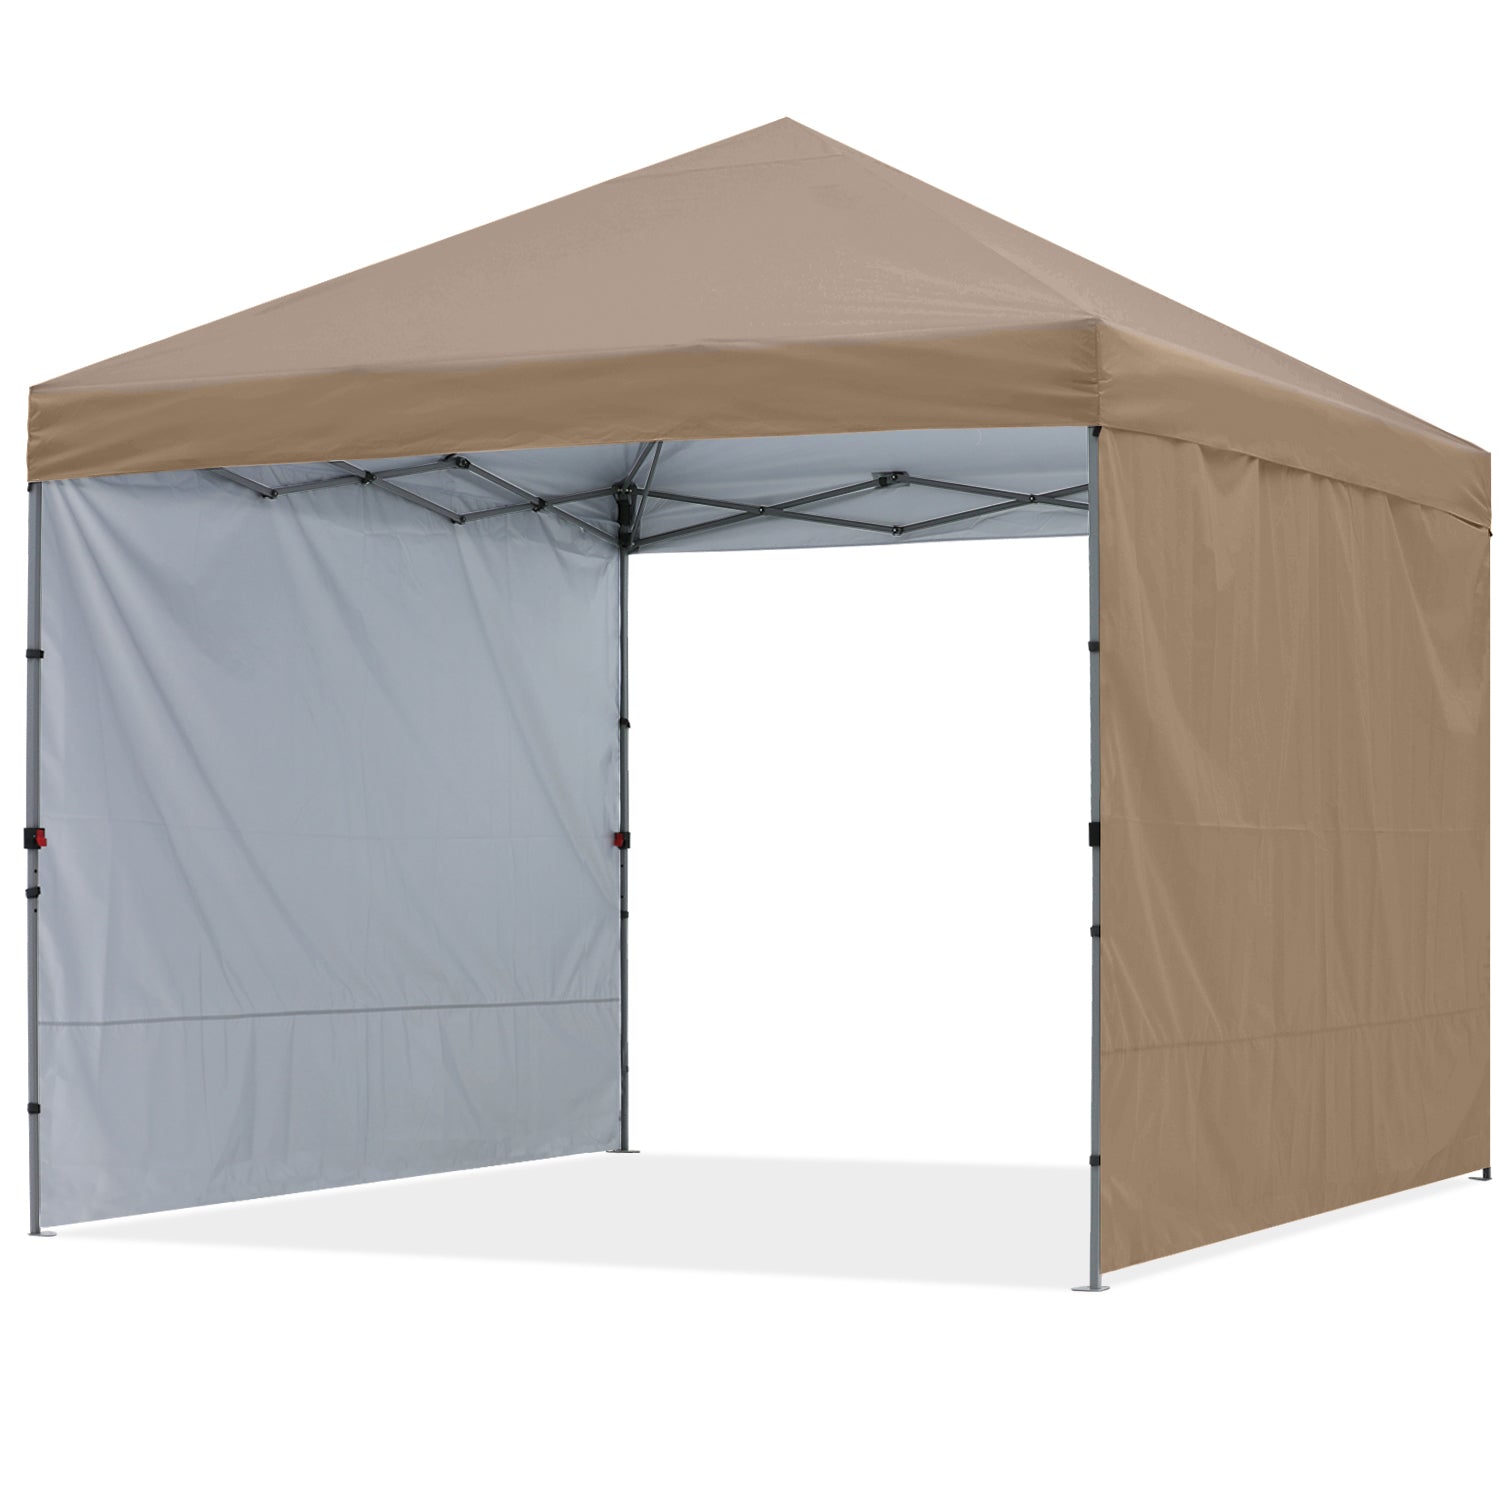 Outdoor Easy Pop up Canopy Tent(2 Sun Walls)